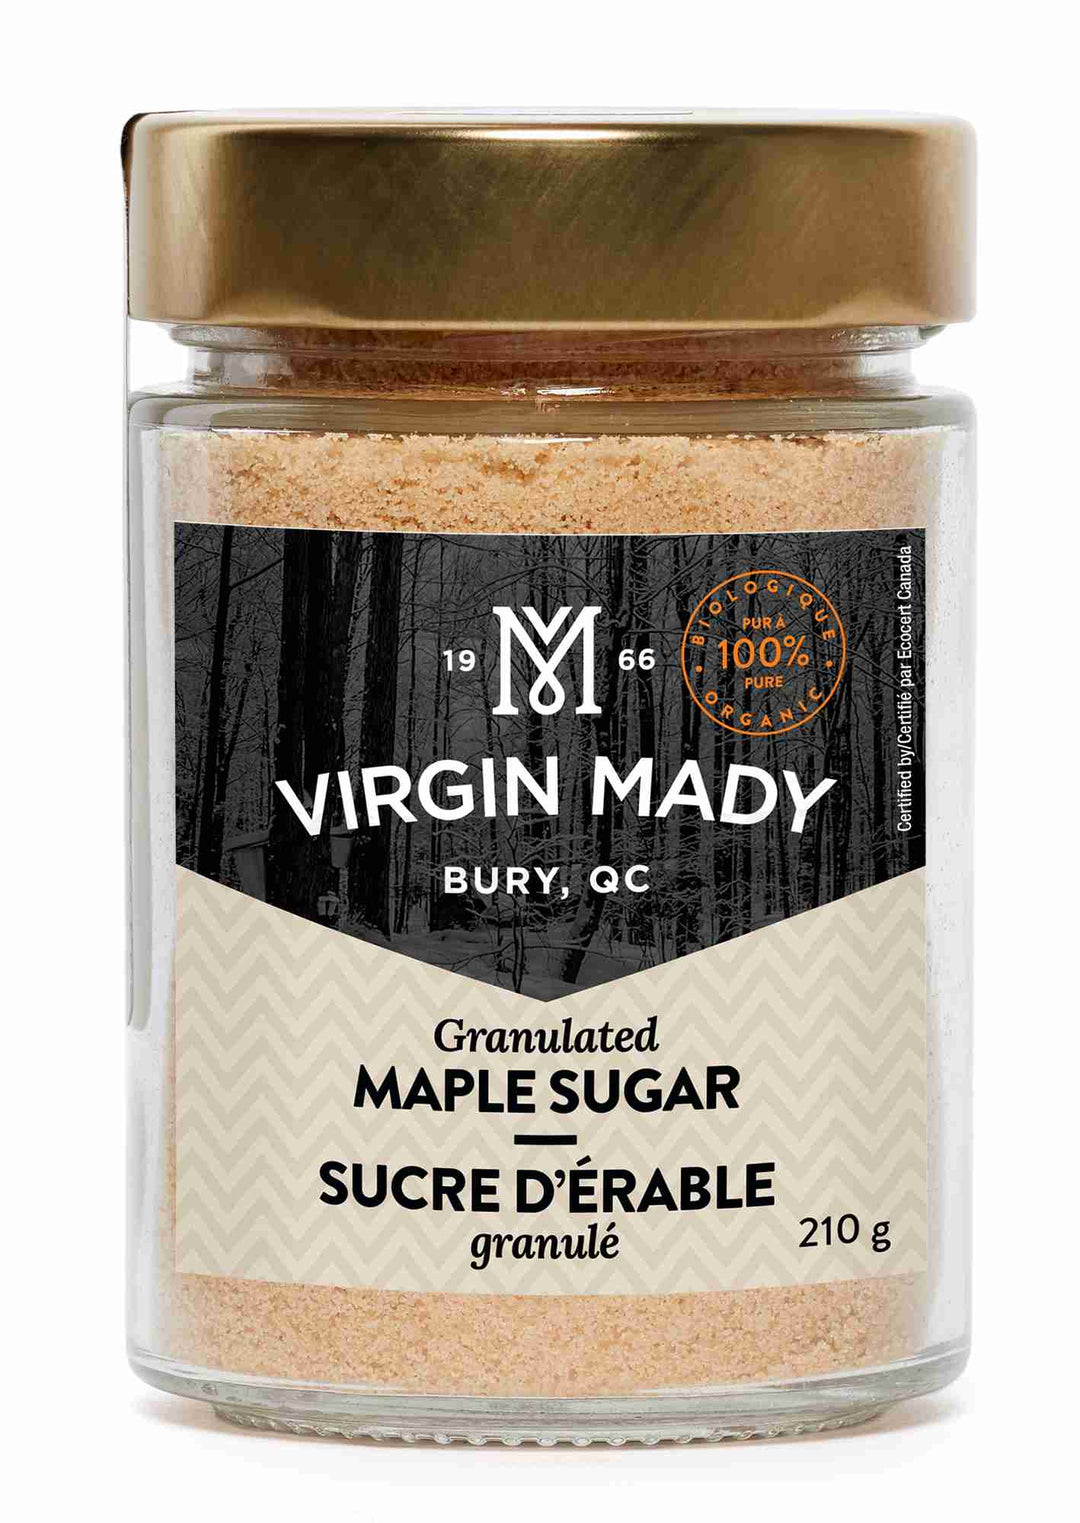 Sucre d'érable granulé - Virgin Mady